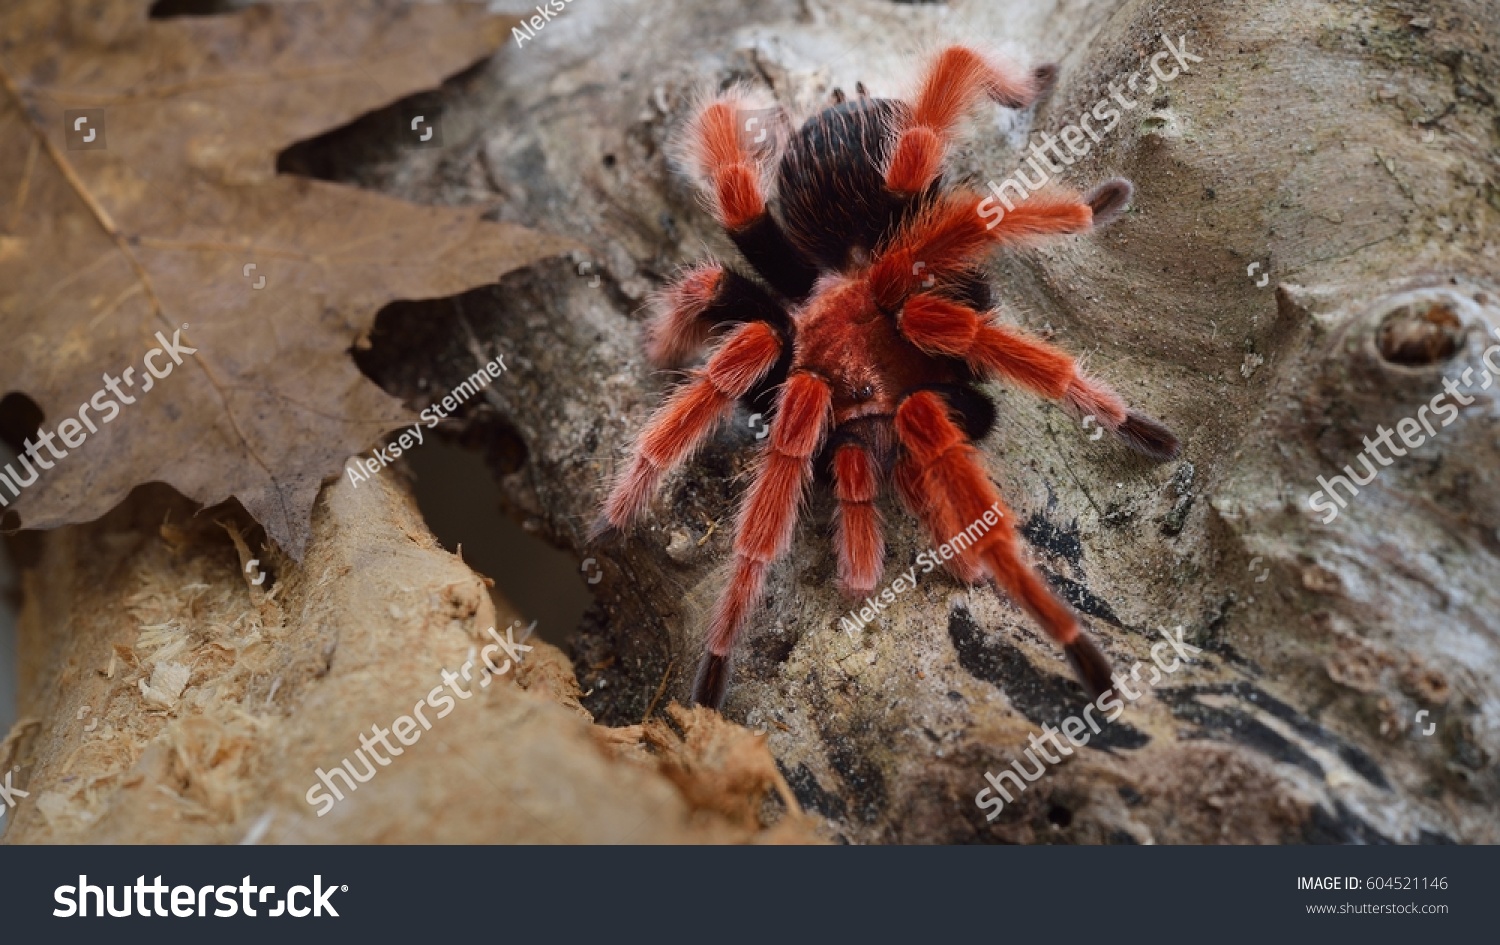 Birdeater tarantula spider Brachypelma boehmei in natural forest environment. Bright red colourful giant arachnid. #604521146